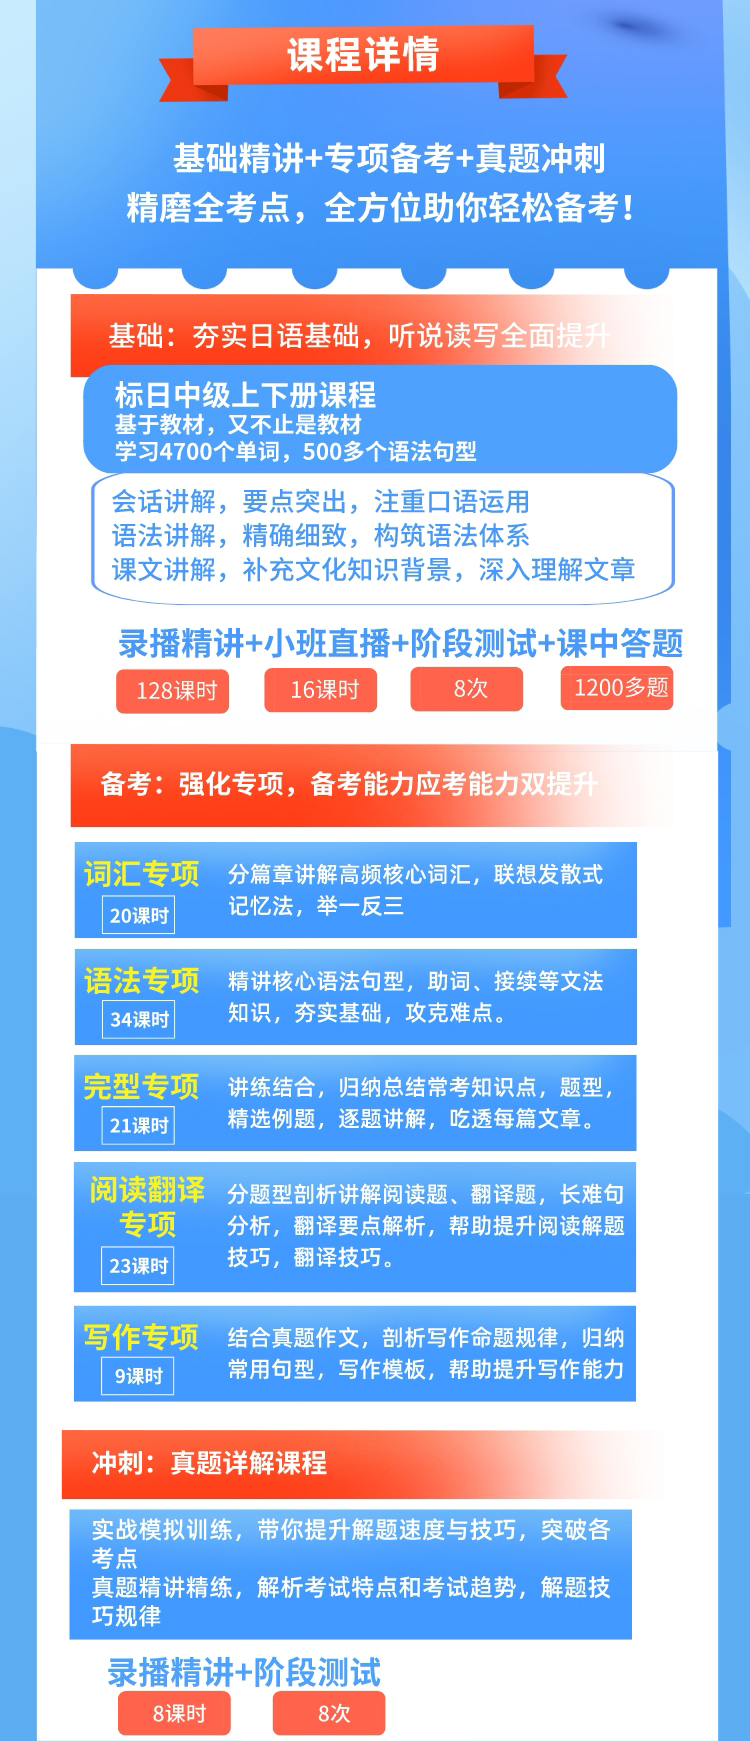 https://simg01.gaodunwangxiao.com/uploadfiles/product-center/202401/25/9b7e8_20240125171011.jpg